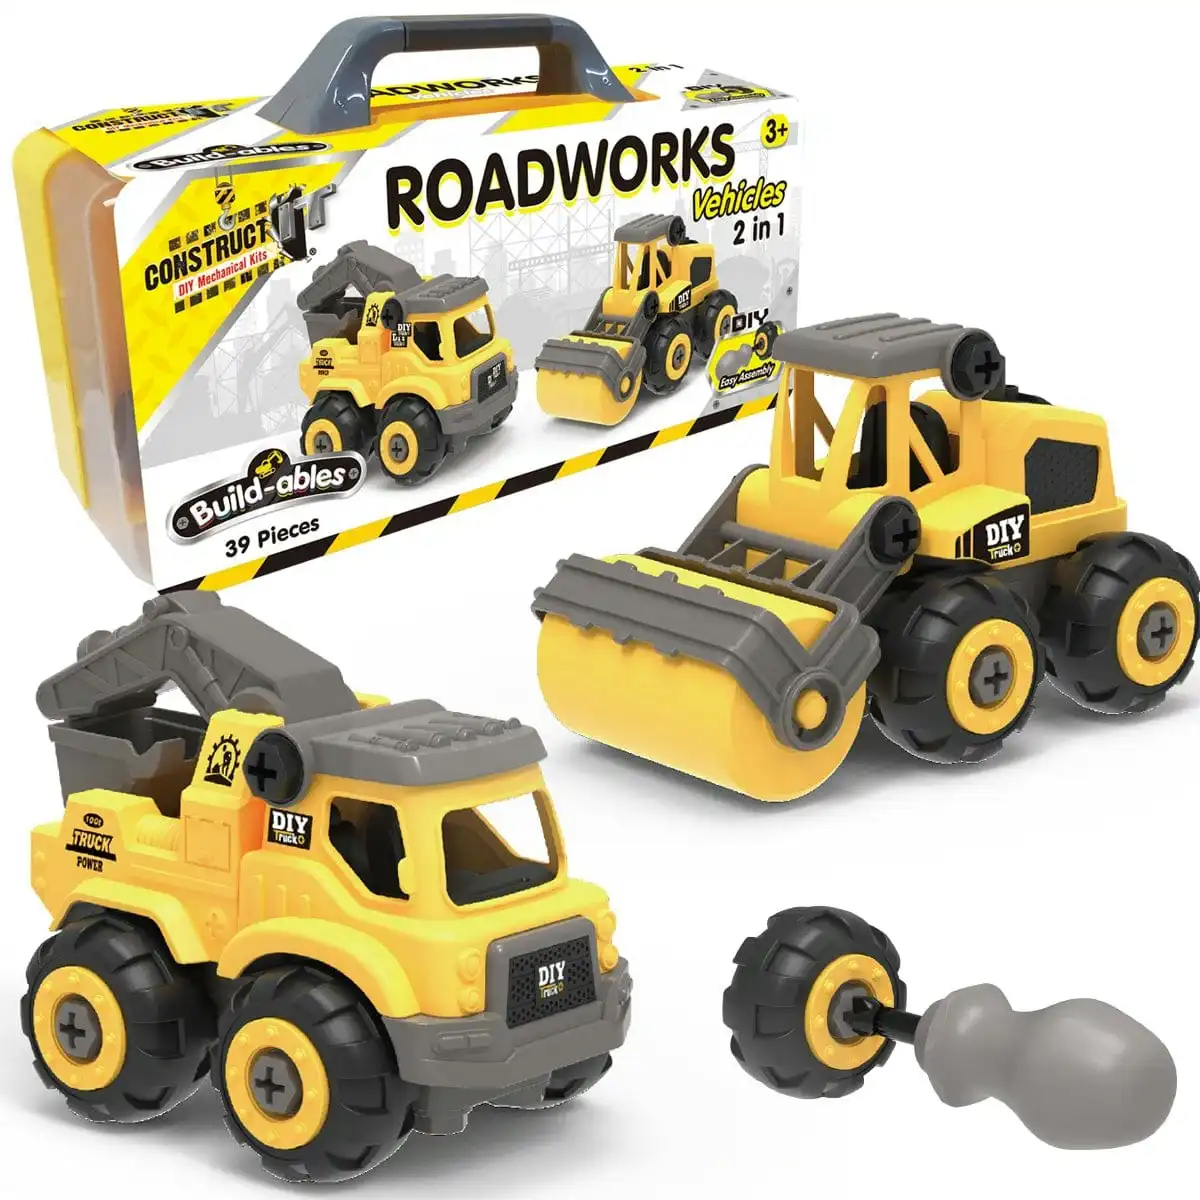 Build-ables Roadworks Set Set 2 in 1